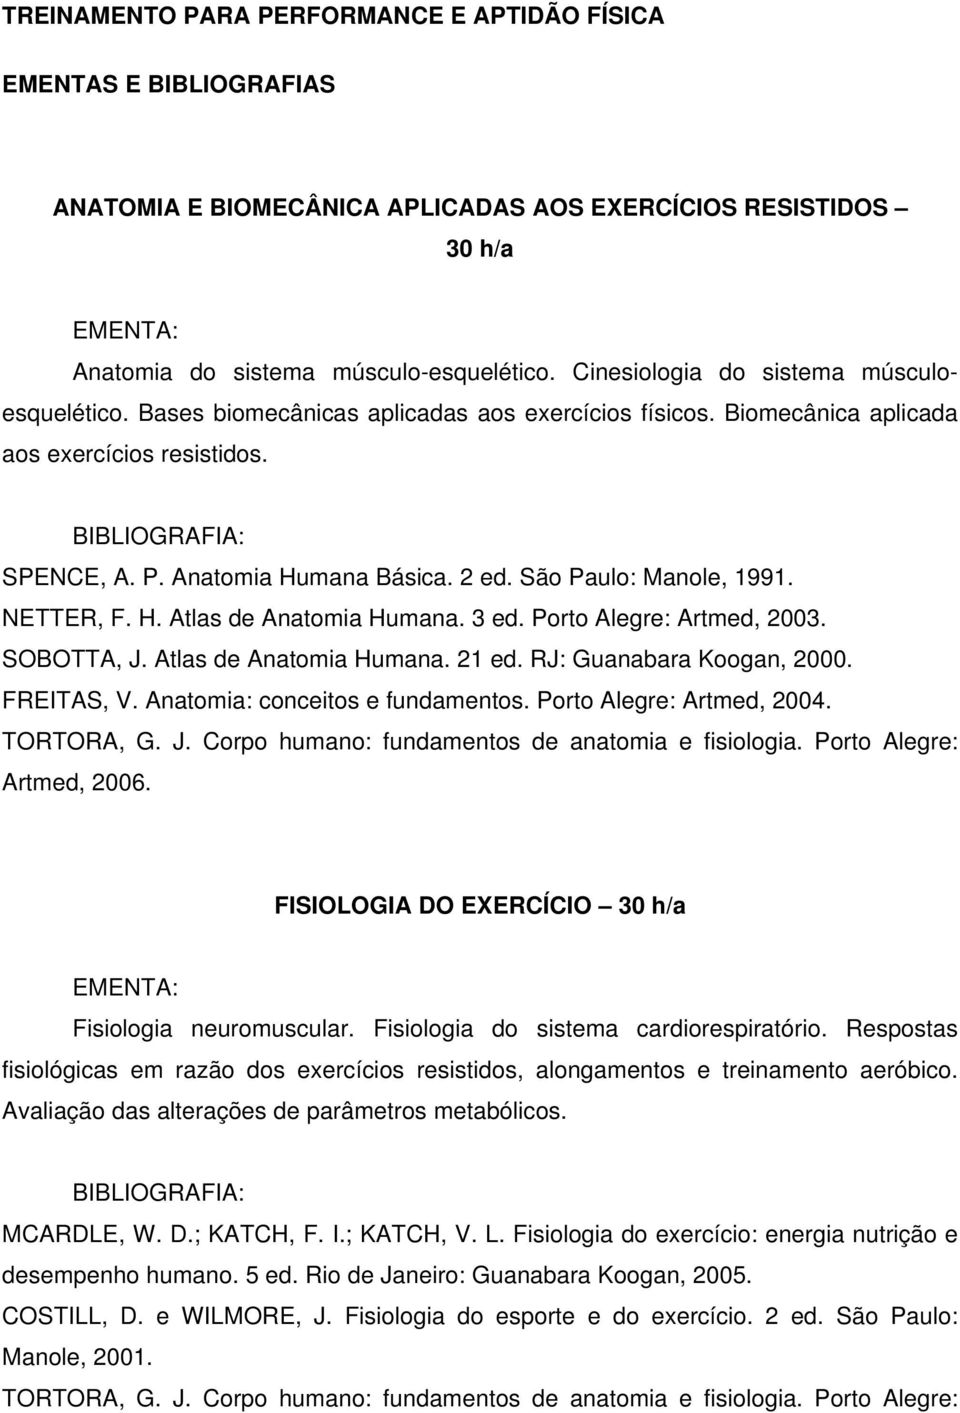 São Paulo: Manole, 1991. NETTER, F. H. Atlas de Anatomia Humana. 3 ed. Porto Alegre: Artmed, 2003. SOBOTTA, J. Atlas de Anatomia Humana. 21 ed. RJ: Guanabara Koogan, 2000. FREITAS, V.